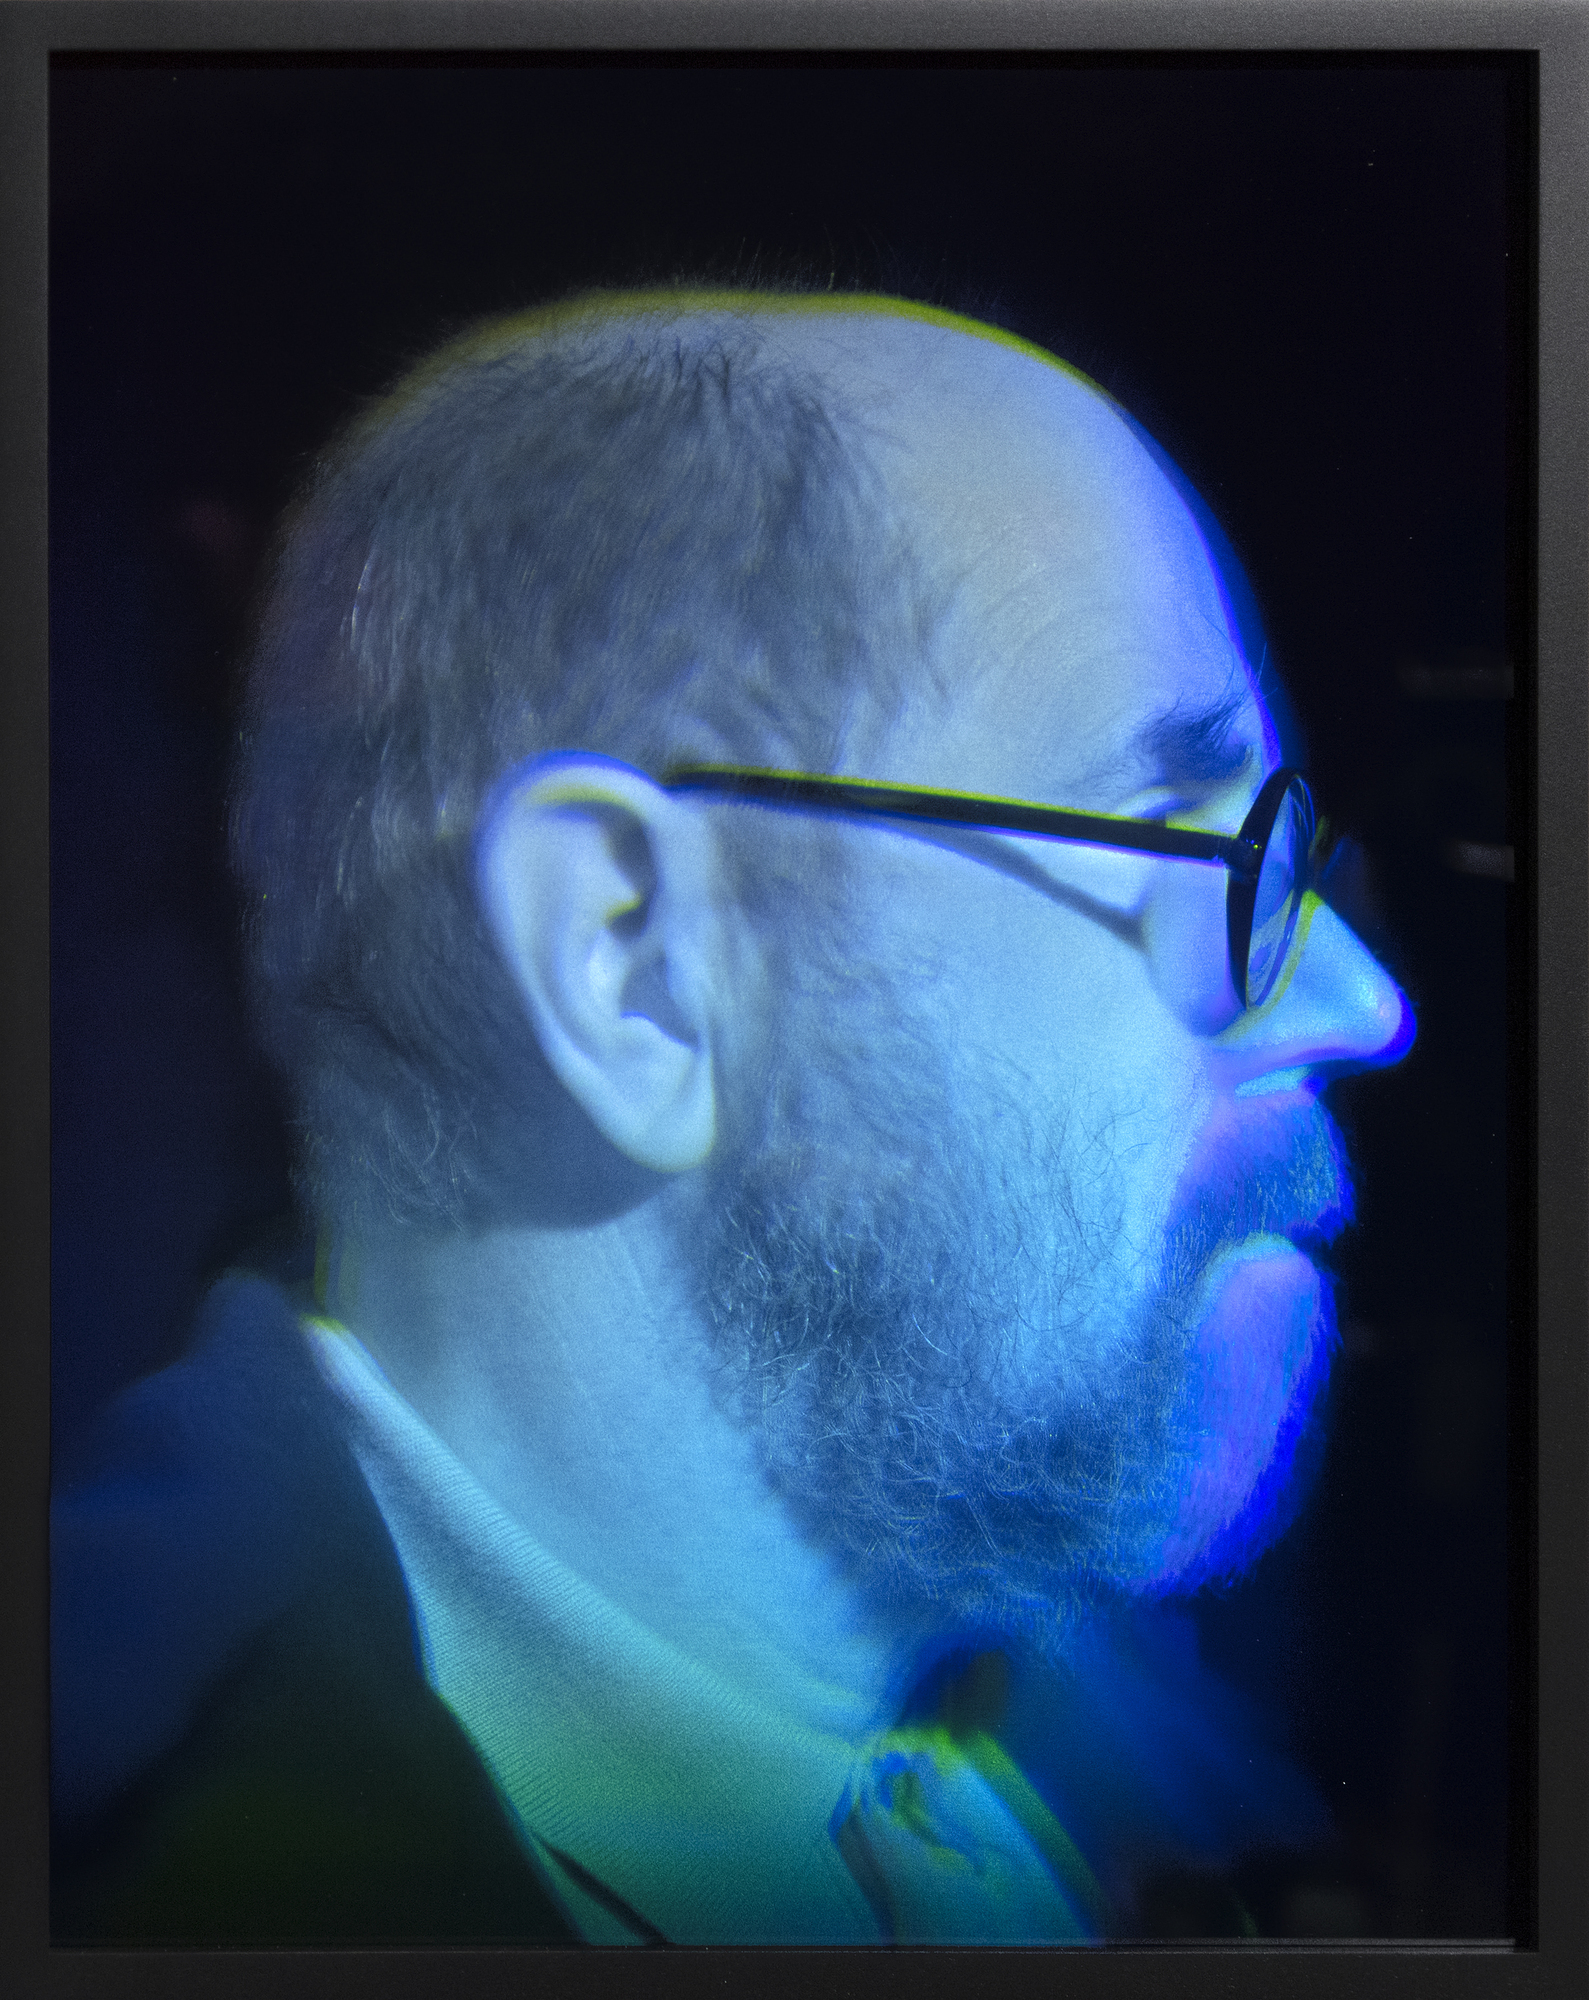 CHUCK CLOSE - Self Portrait - suite of 4 glass holograms - 14 x 11 in. ea.